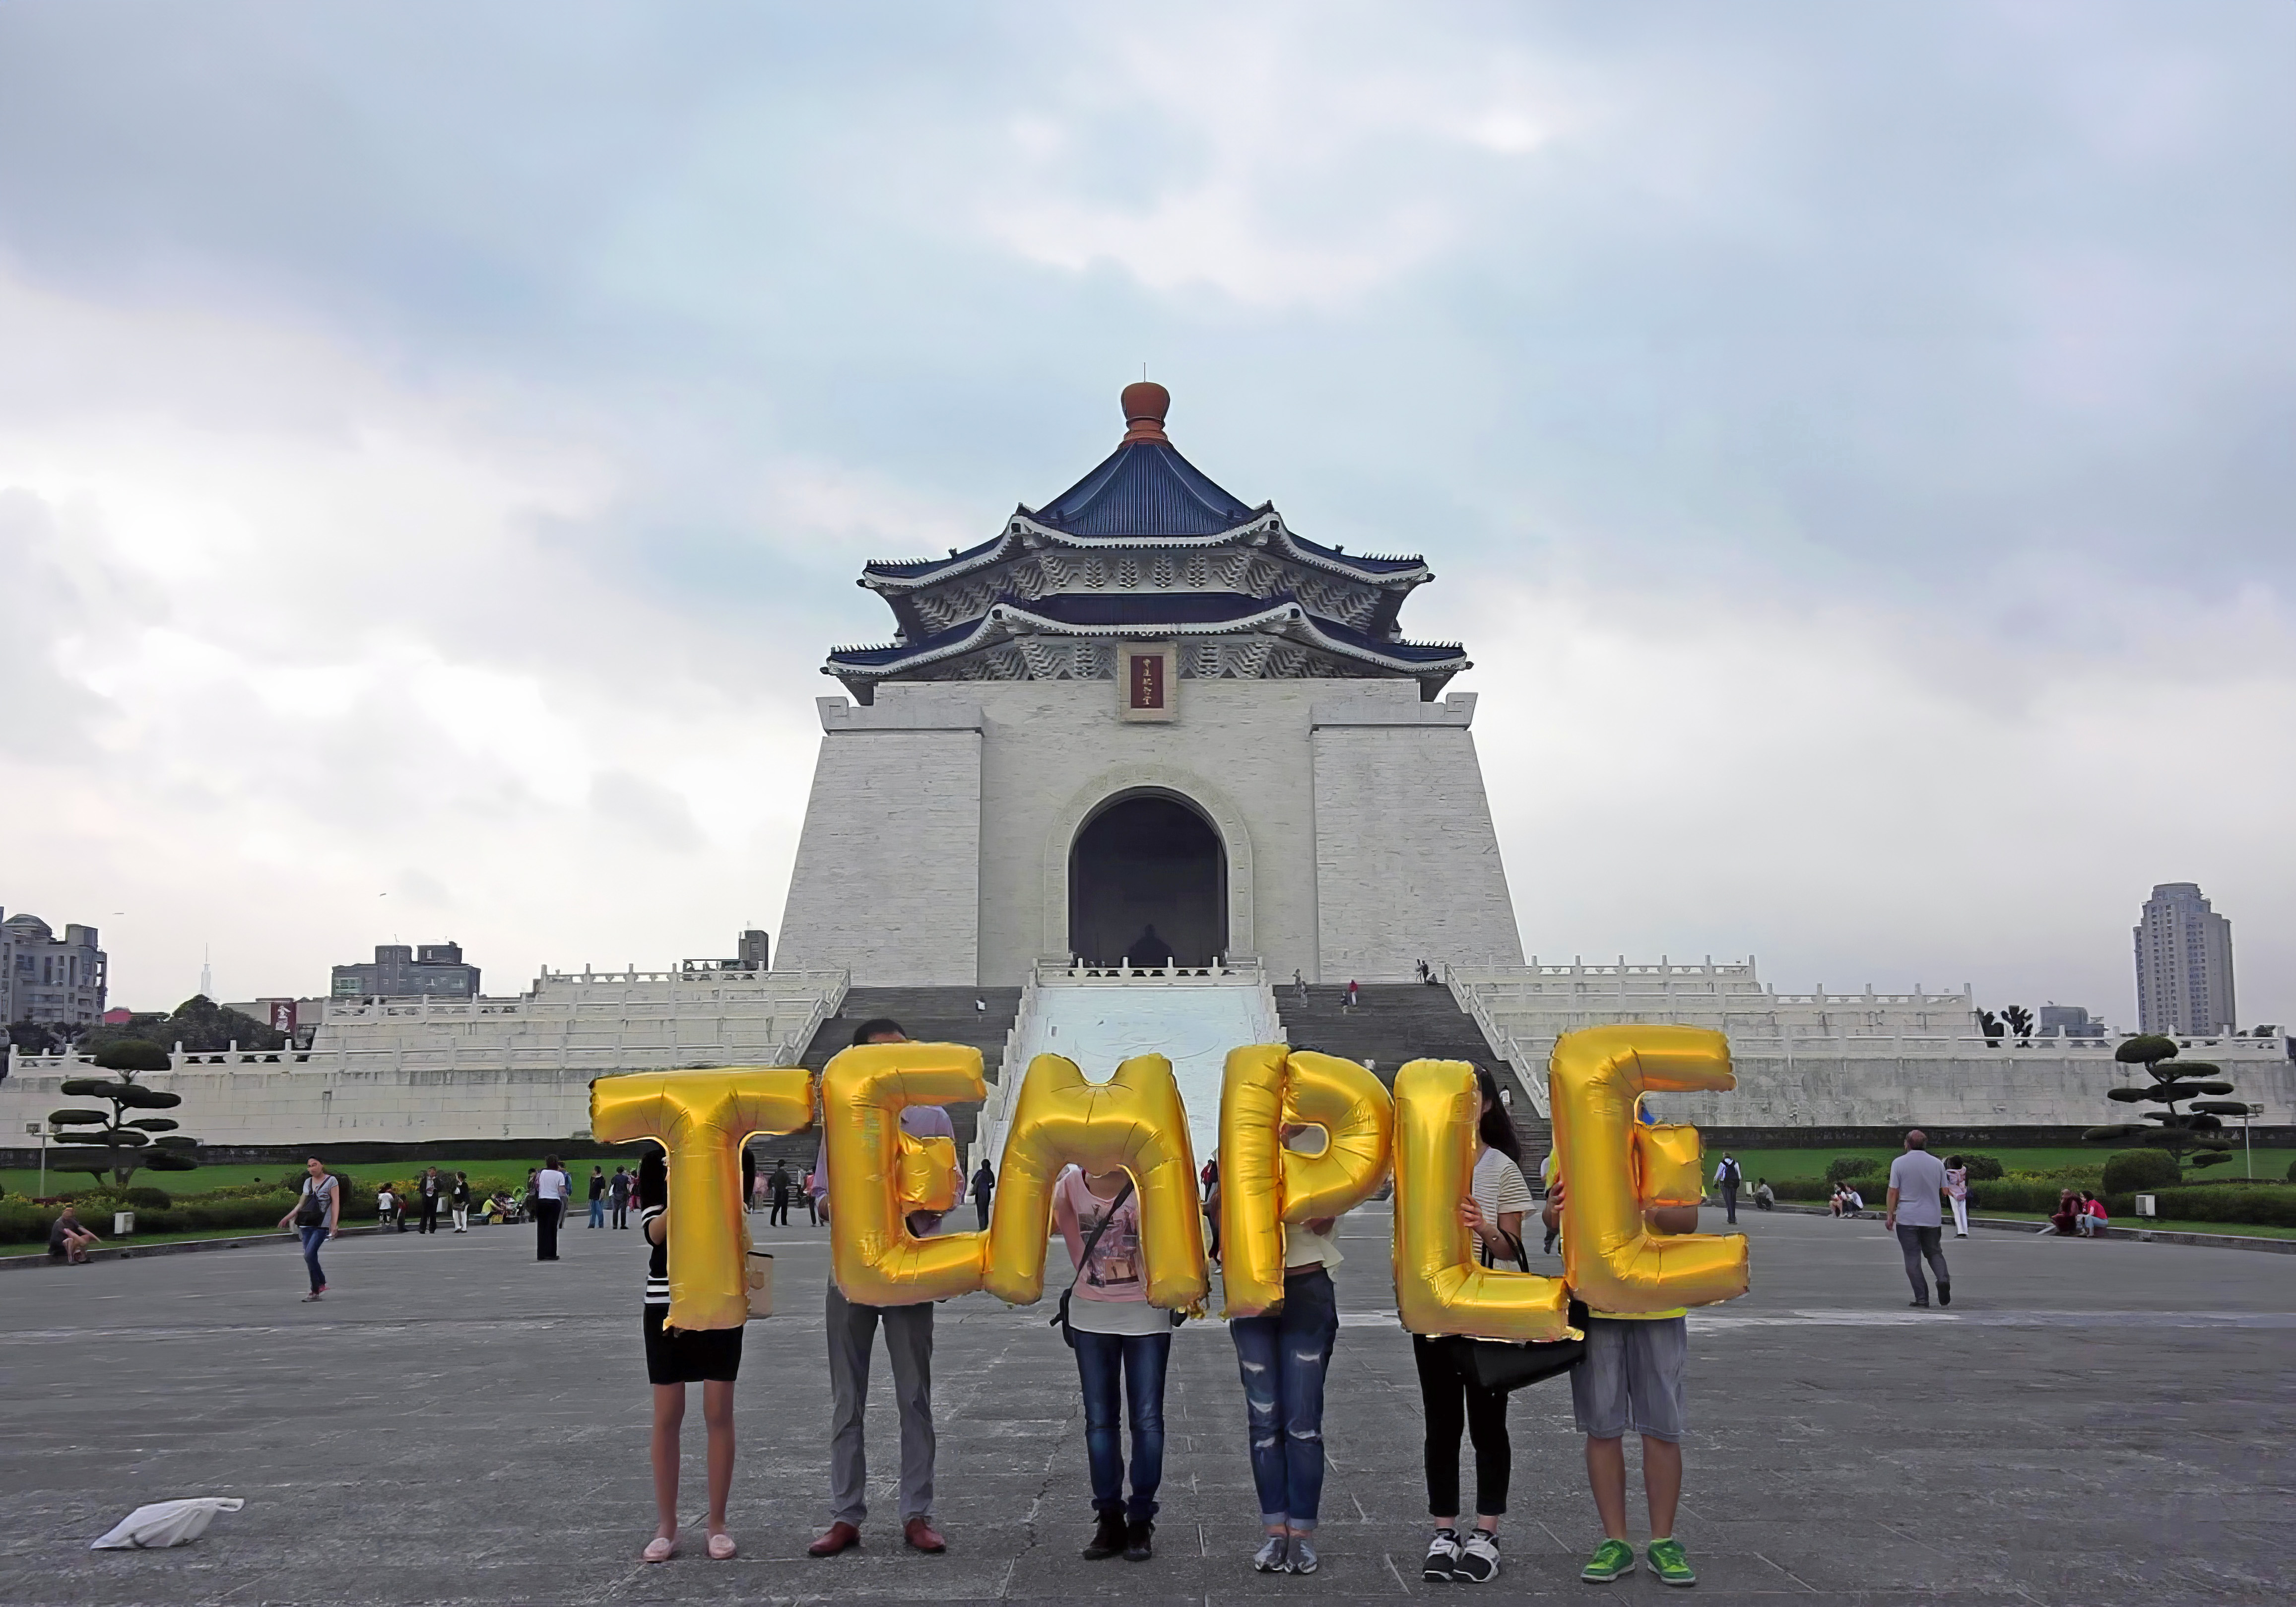 Taiwan, Taipei, Chiang Kai-shek Memorial Hall - Temple, Silence Was Golden, golden balloons